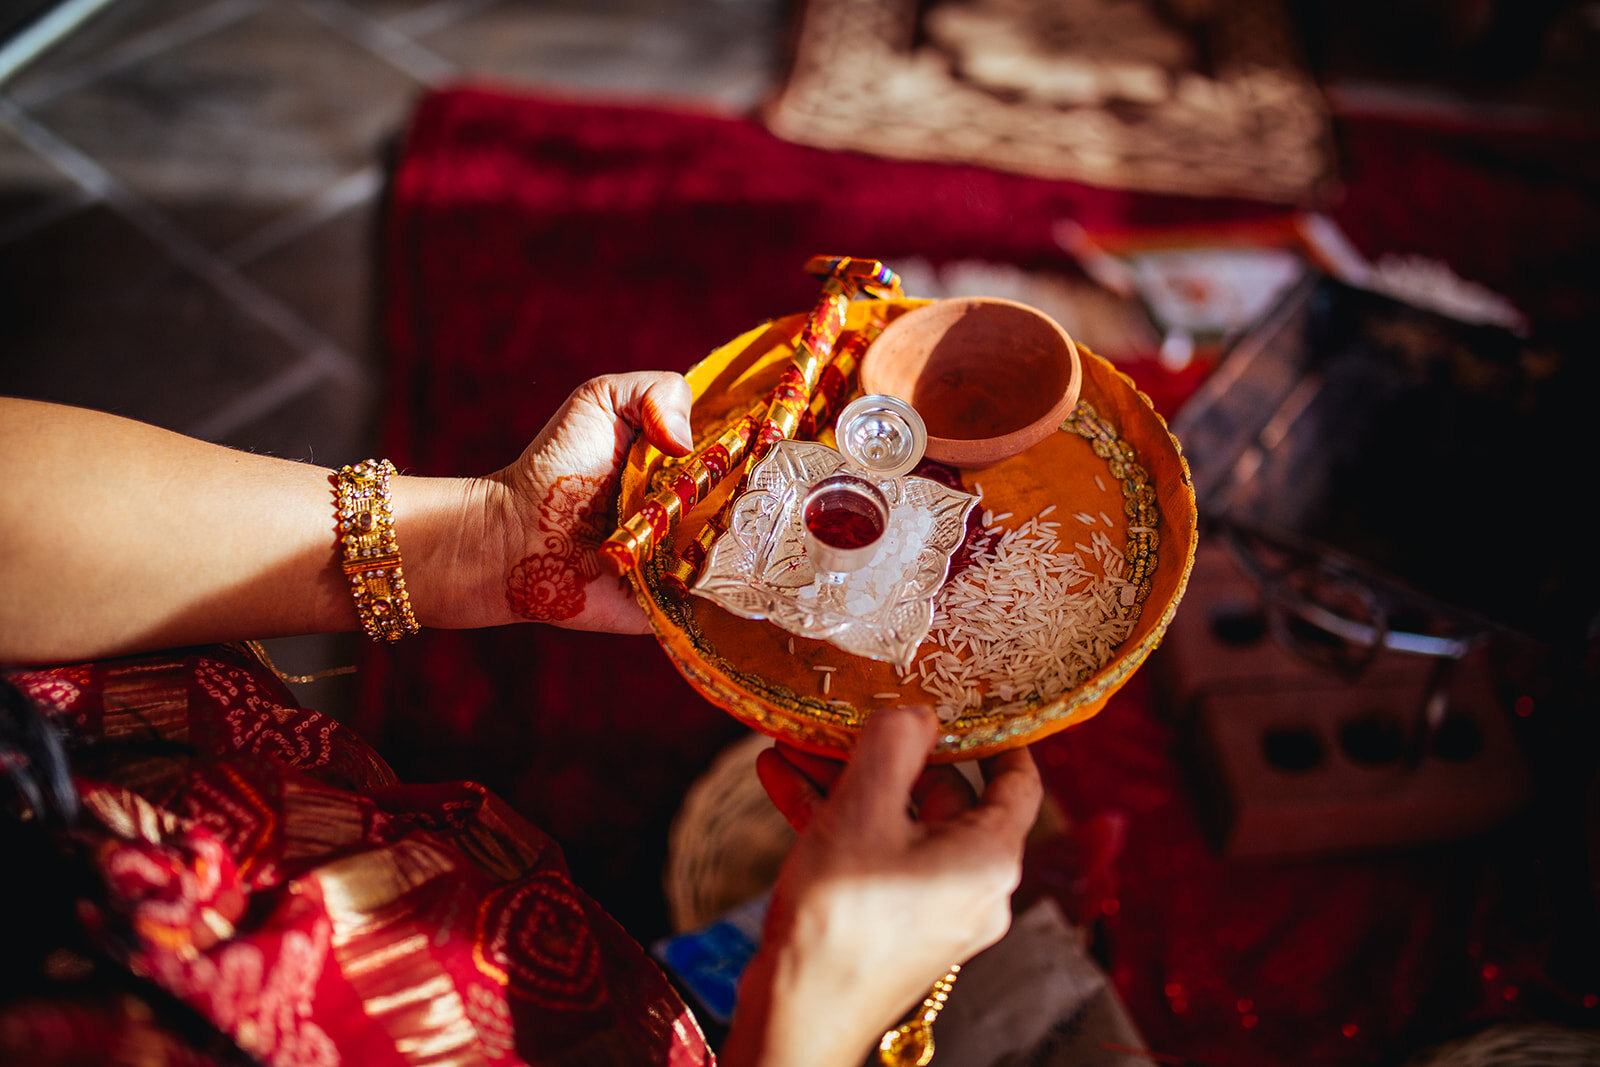 Indian wedding ritual objects on a plate in Richmond VA Shawnee Custalow photography